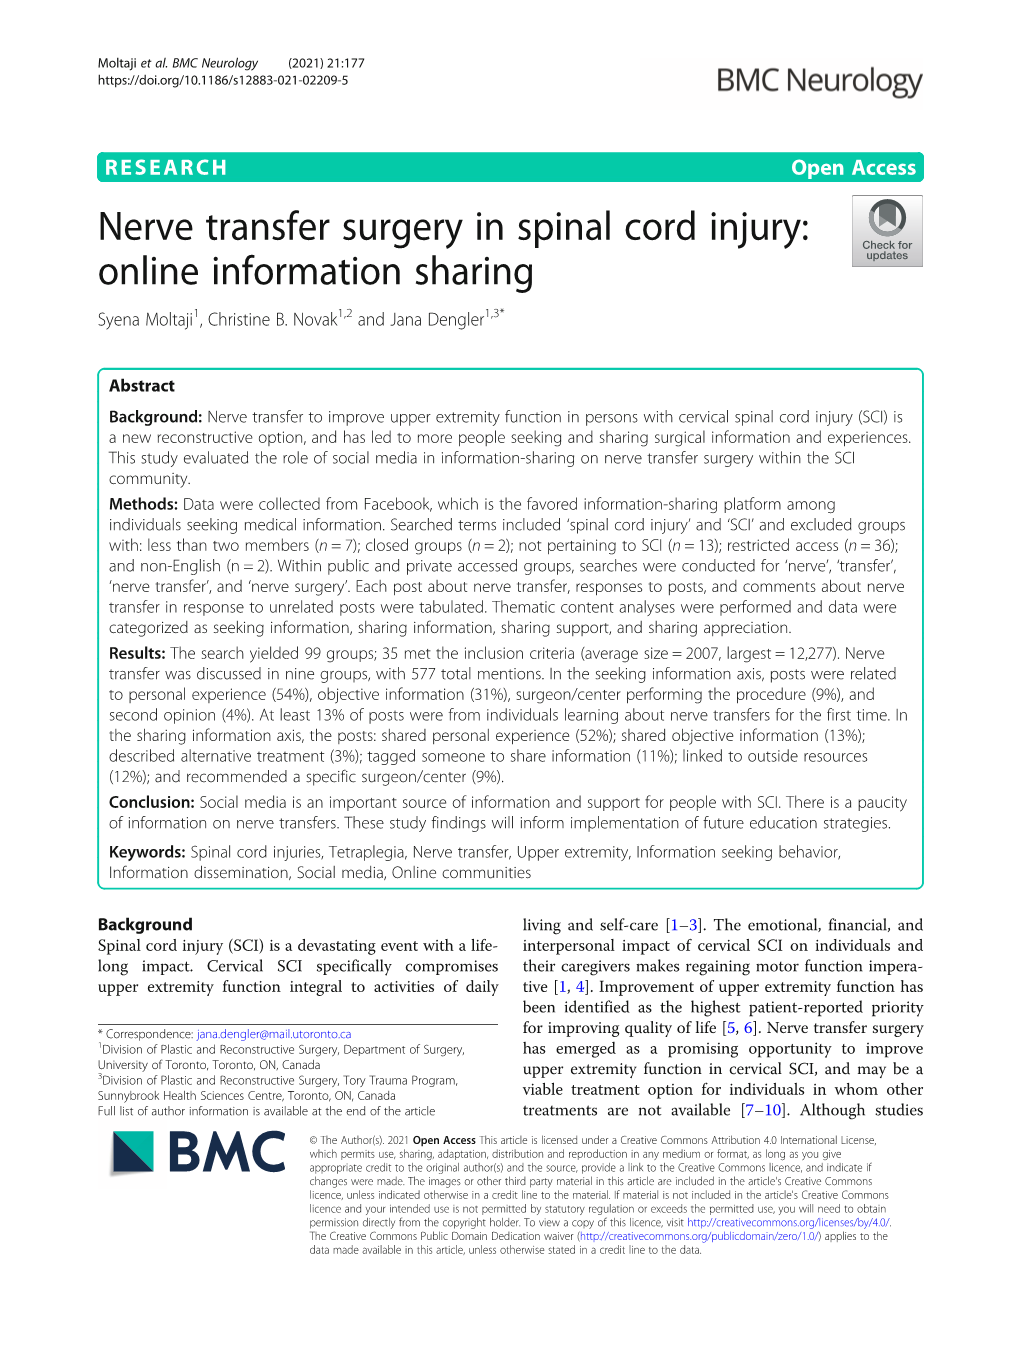 Nerve Transfer Surgery in Spinal Cord Injury: Online Information Sharing Syena Moltaji1, Christine B